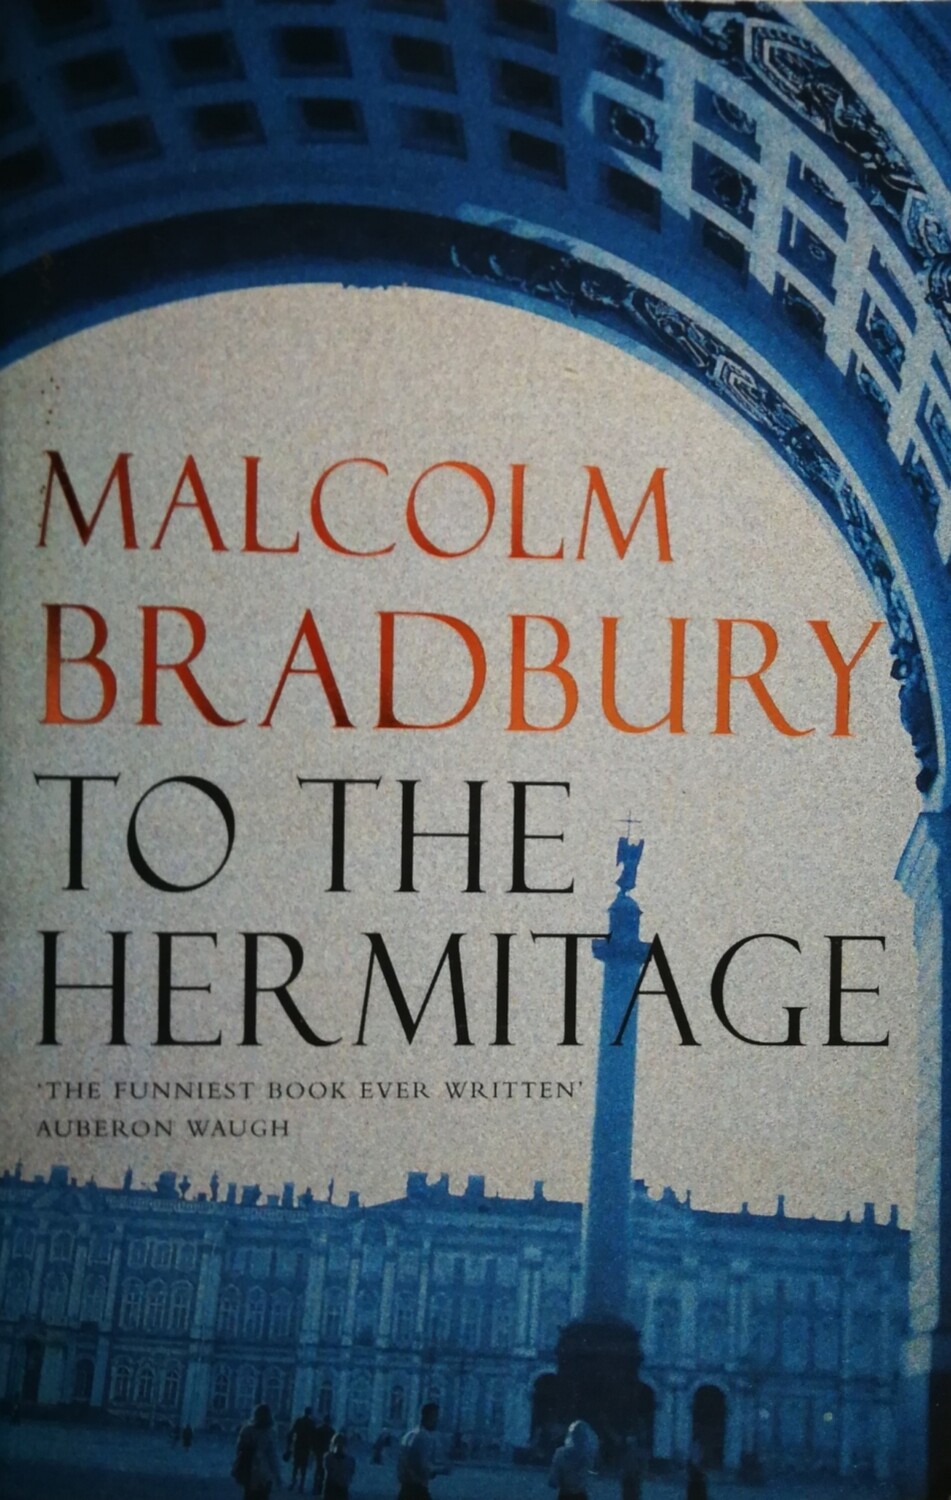 To the Hermitage by Malcolm Bradbury